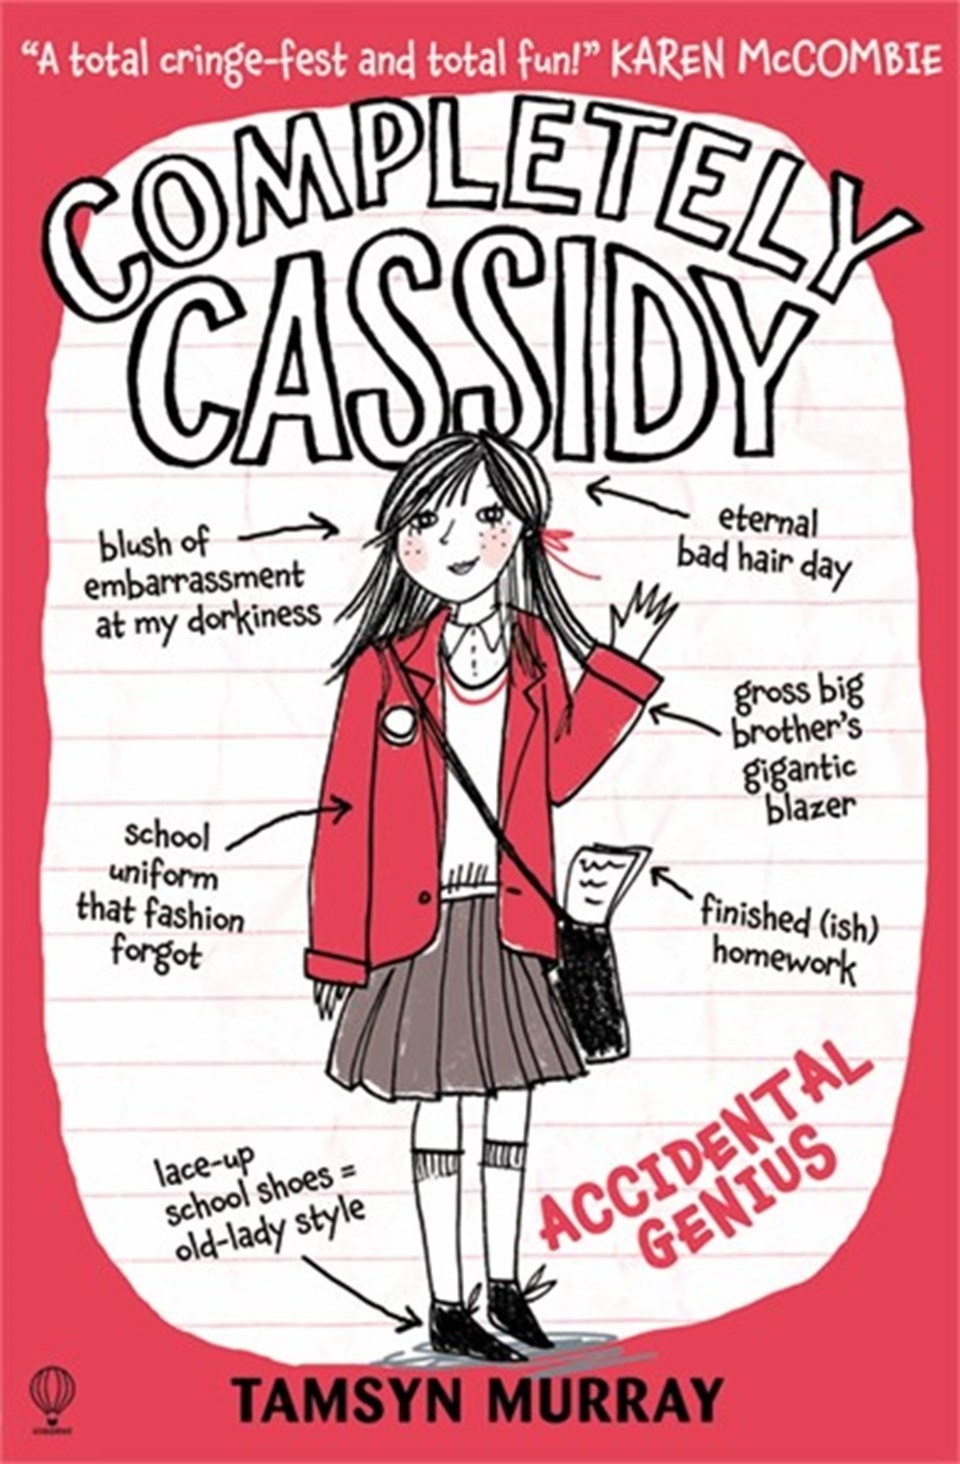 Completely Cassidy - Accidental Genius